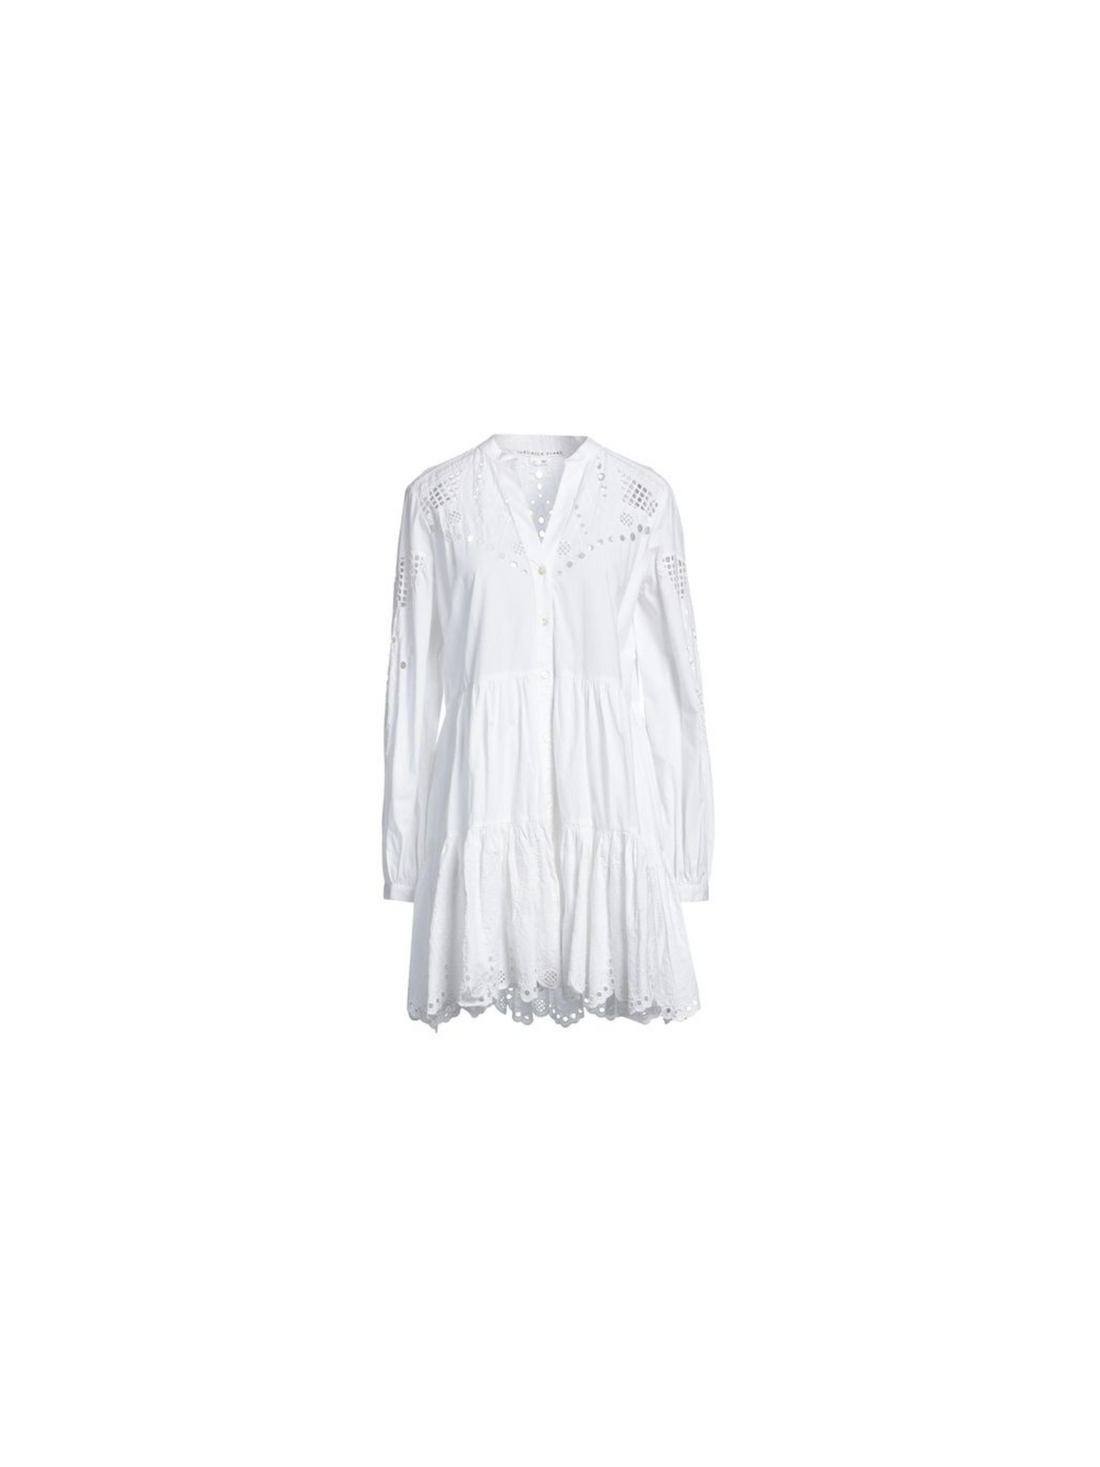 Veronica Beard White Long Sleeve Short Dress